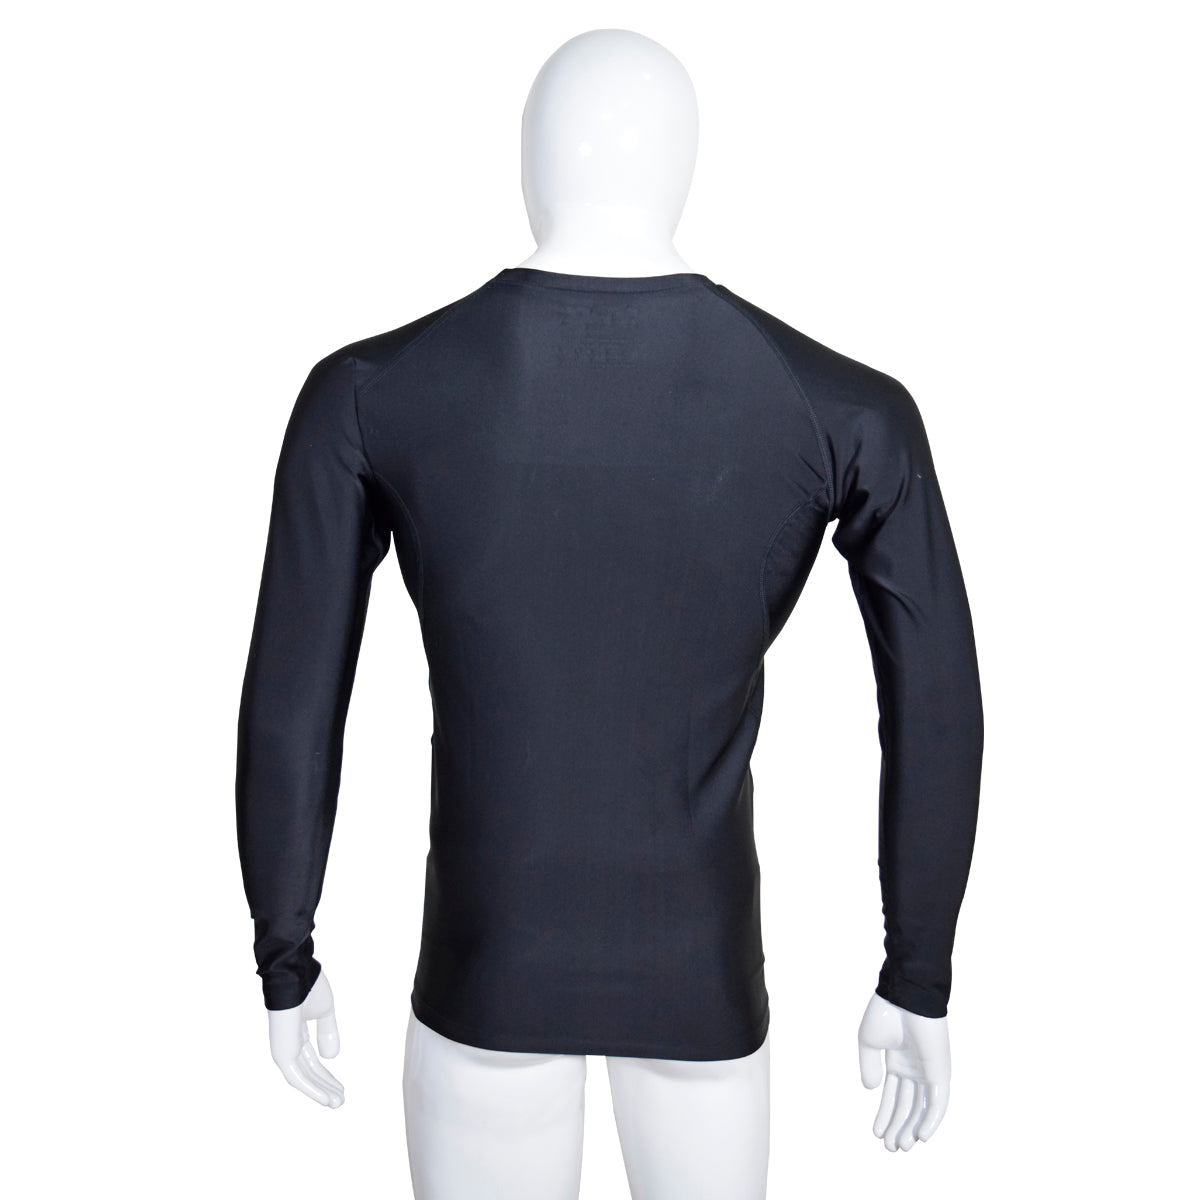 MRX Men's Compression Shirts Athletic Gym Workout Rash Guard Base Layer Short & Long Sleeve Top